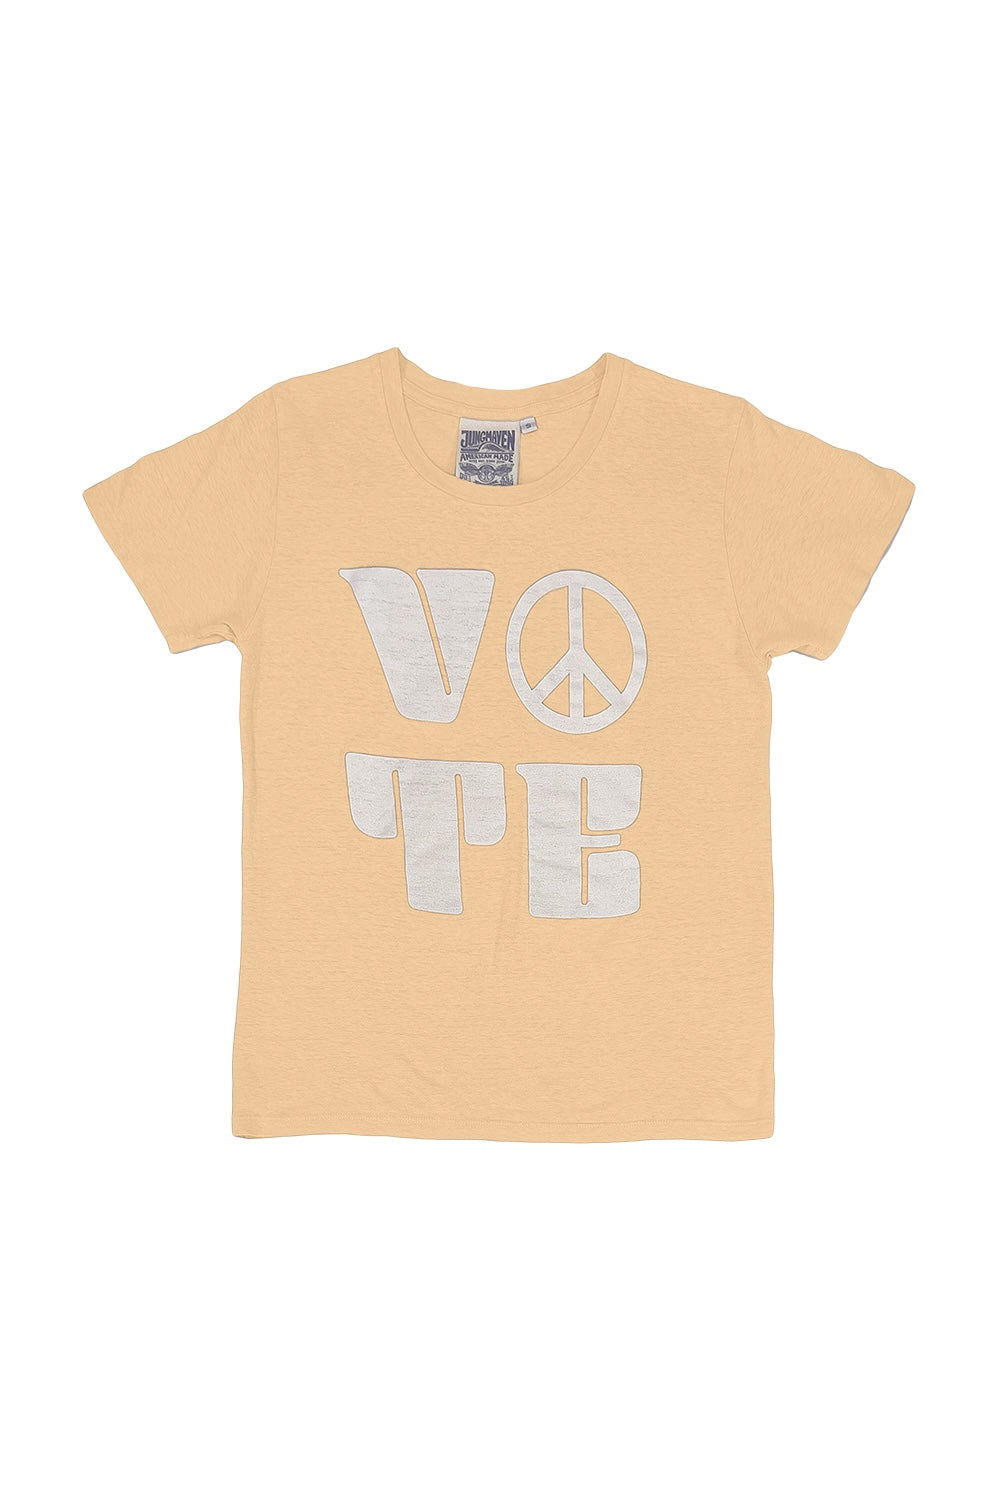 Vote Peace Lorel Tee | Jungmaven Hemp Clothing & Accessories / Color: Oat Milk